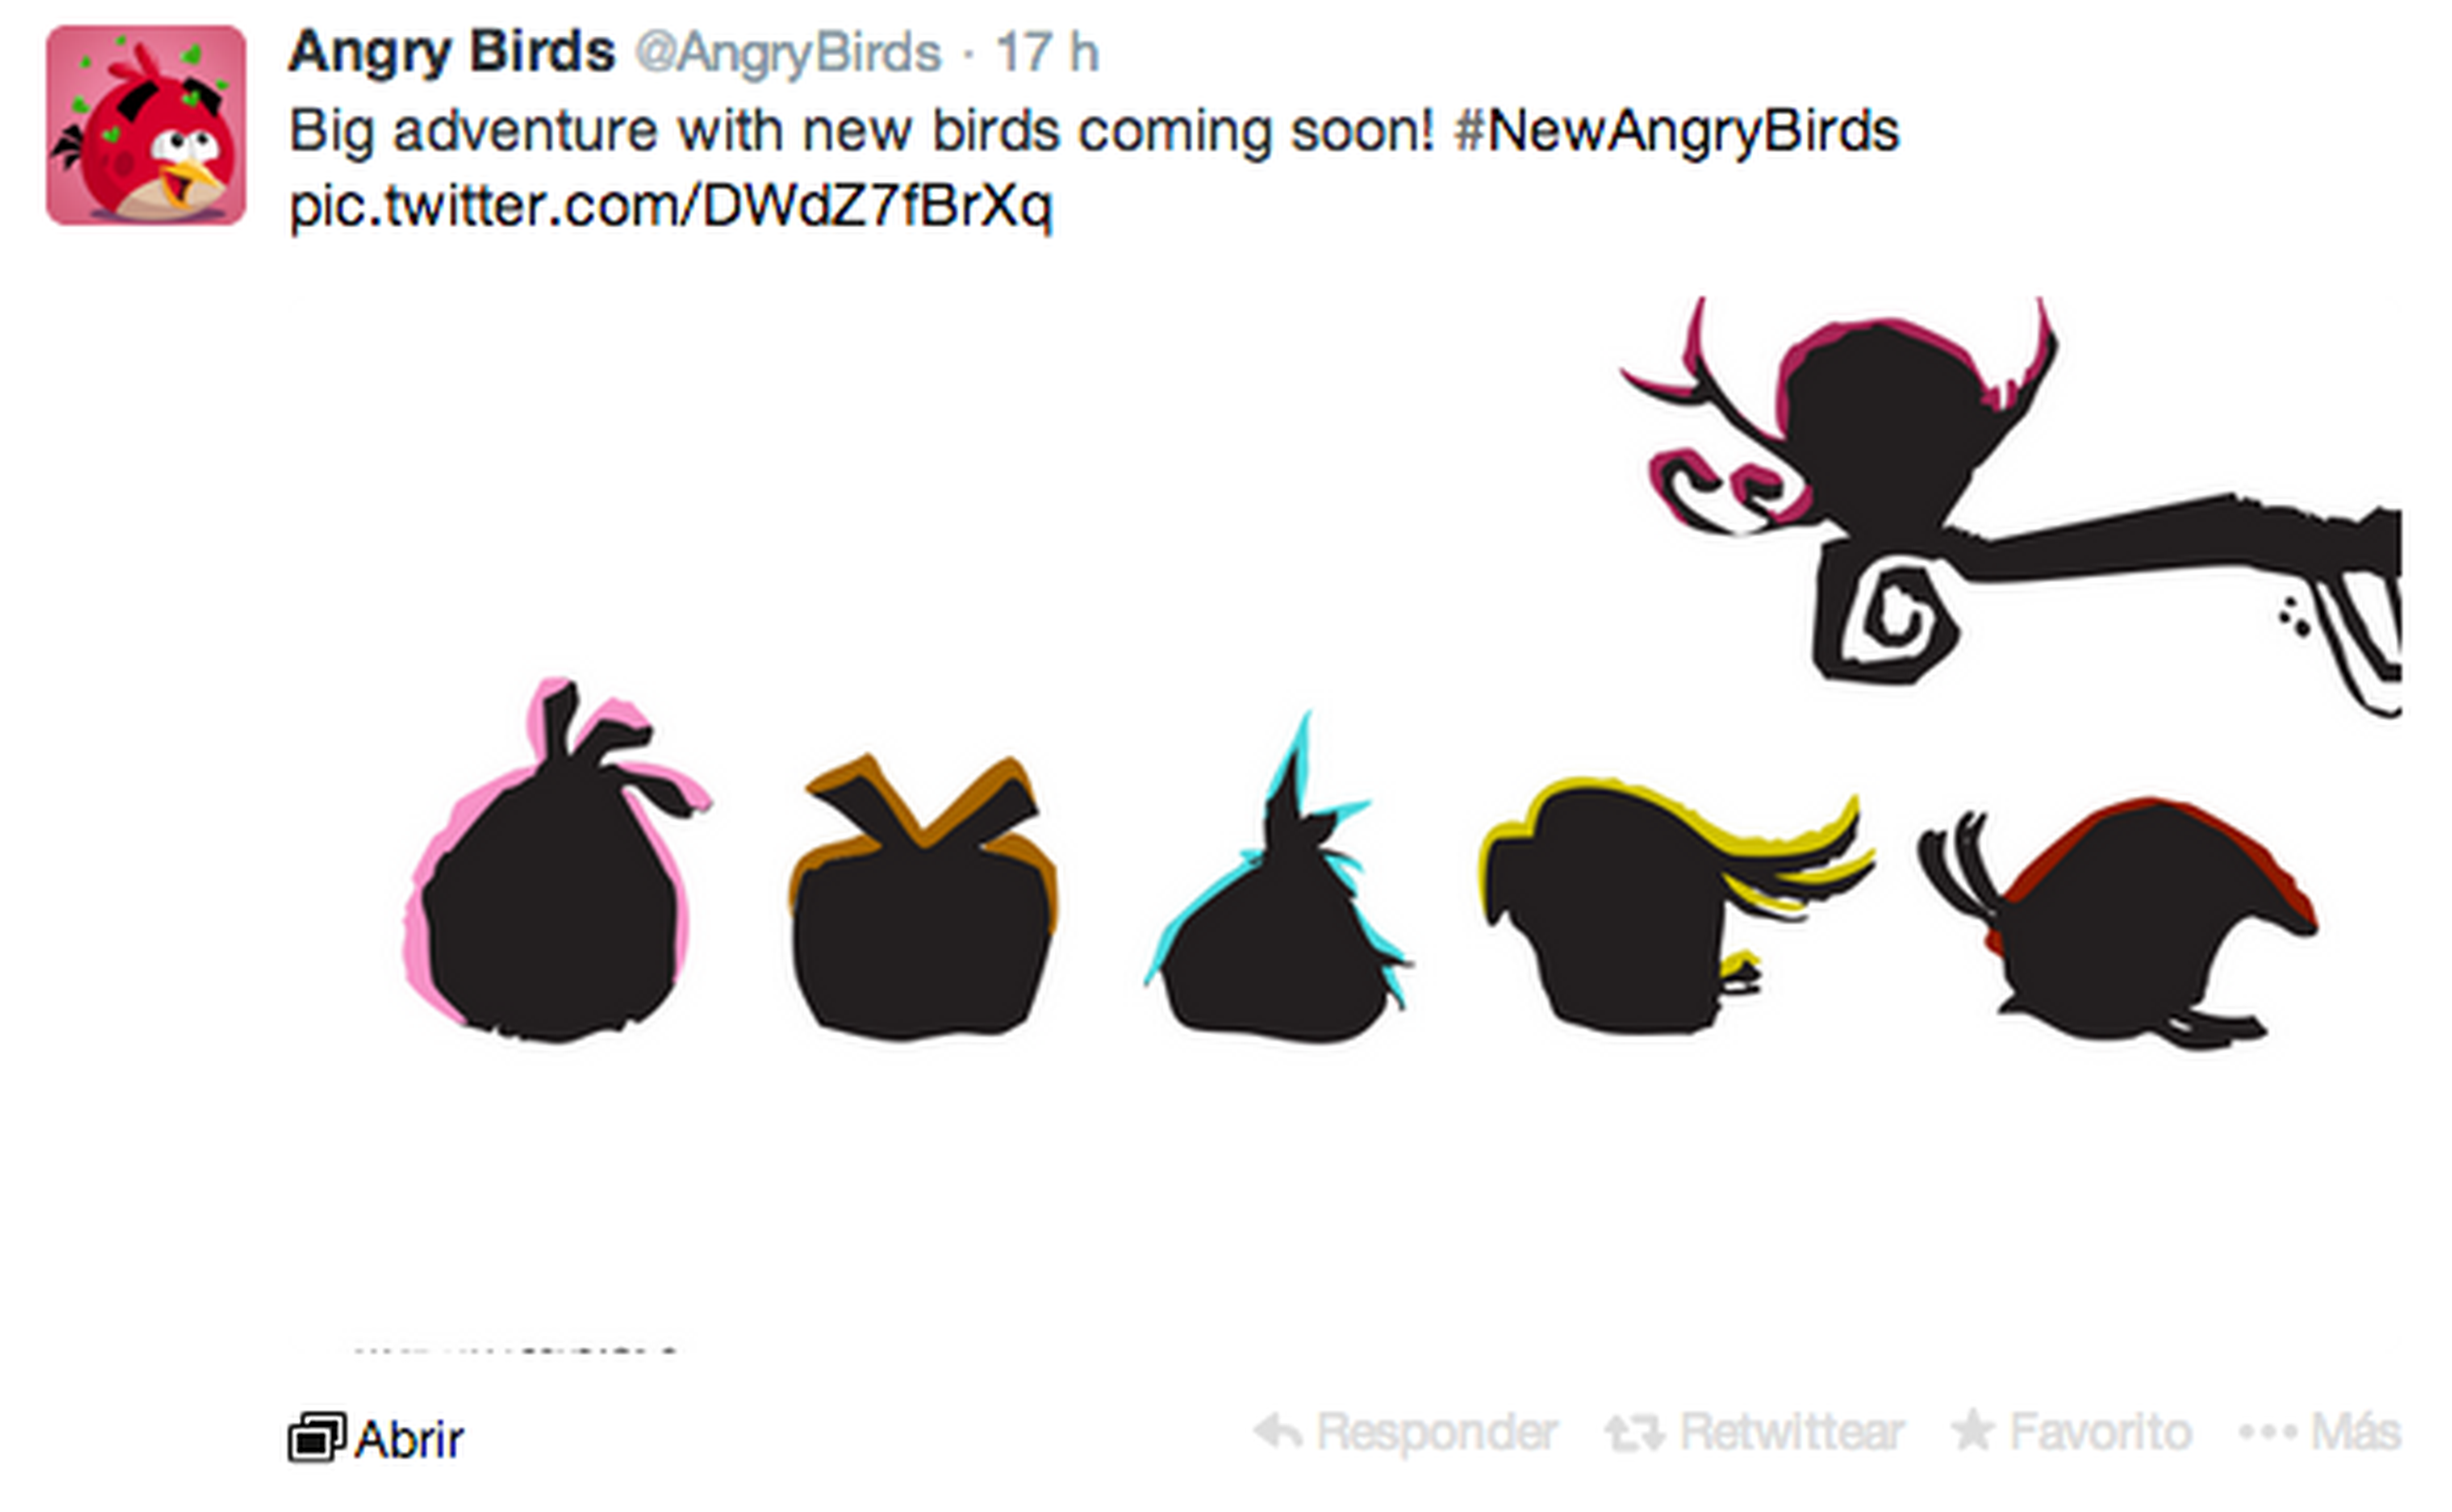 Angry Birds Stella